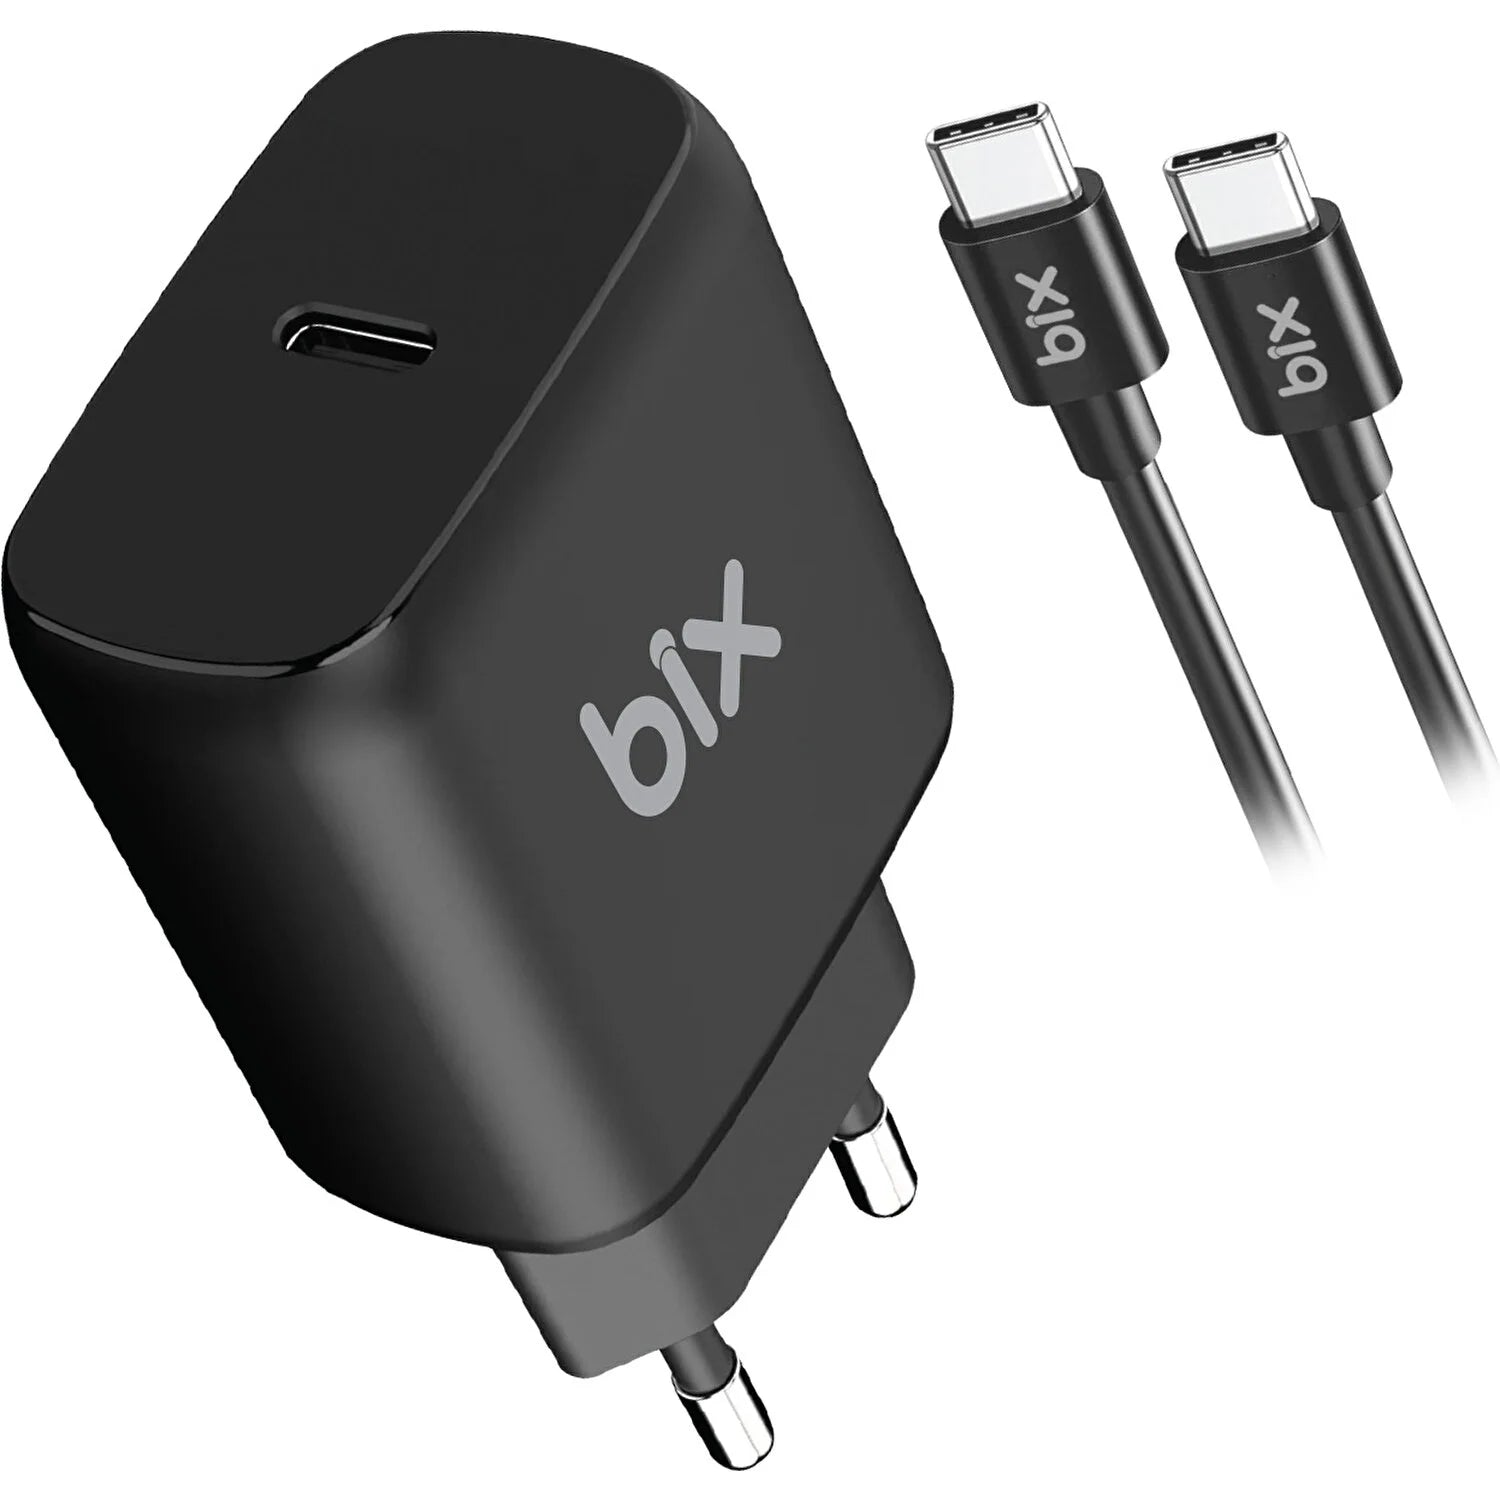 Bix 5A Type-C Kablolu Seyahat Şarj Cihazı